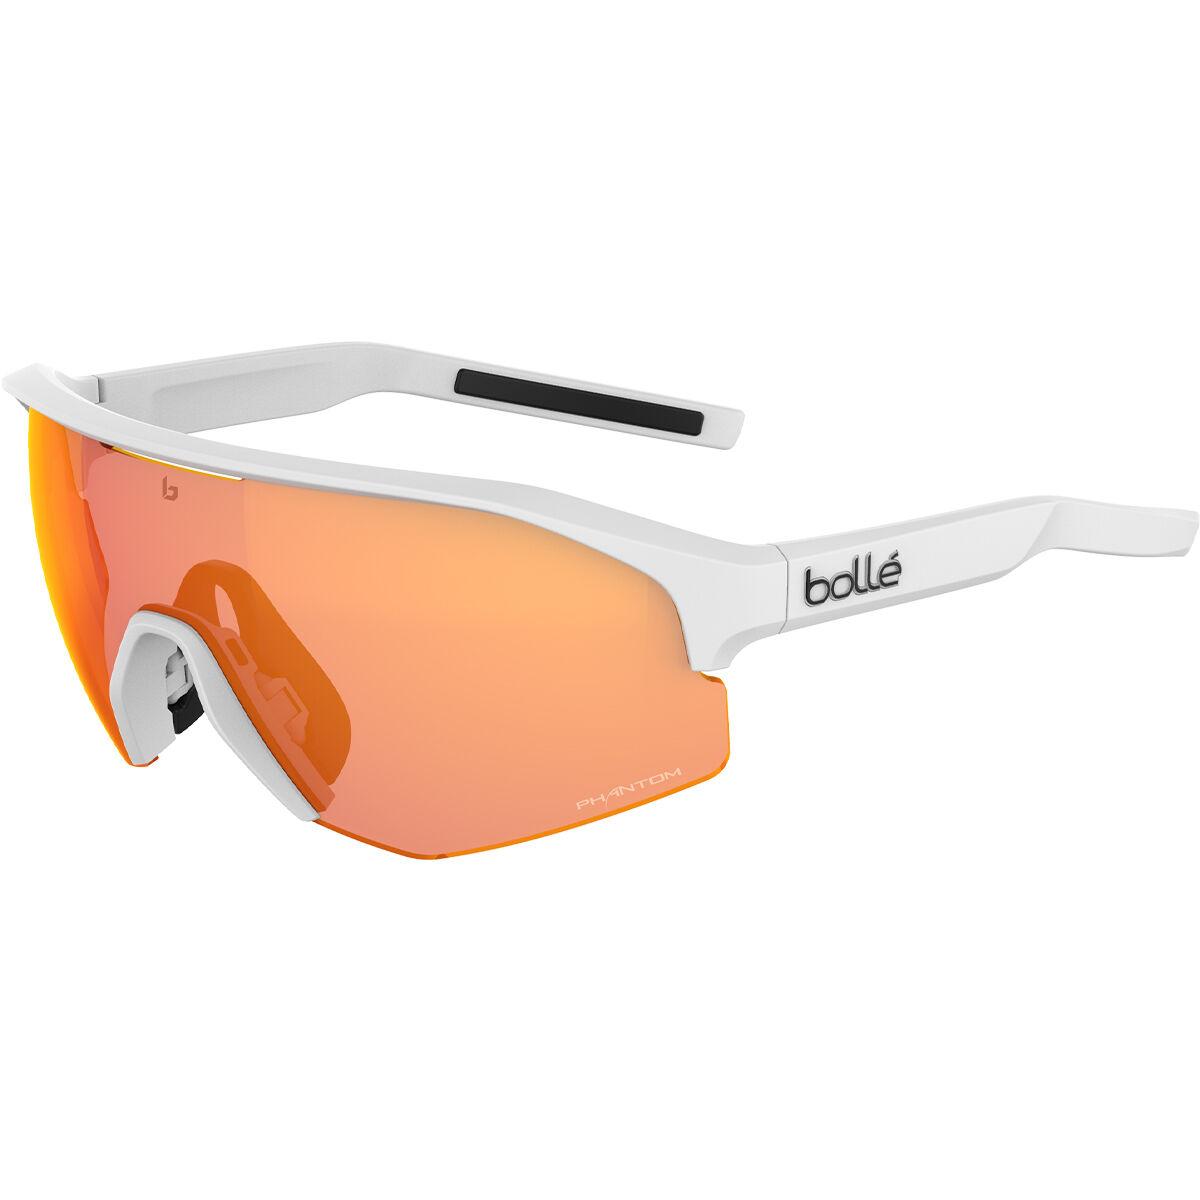 Bollé LIGHTSHIFTER Tennis Sunglasses - Phantom Lens Technology 